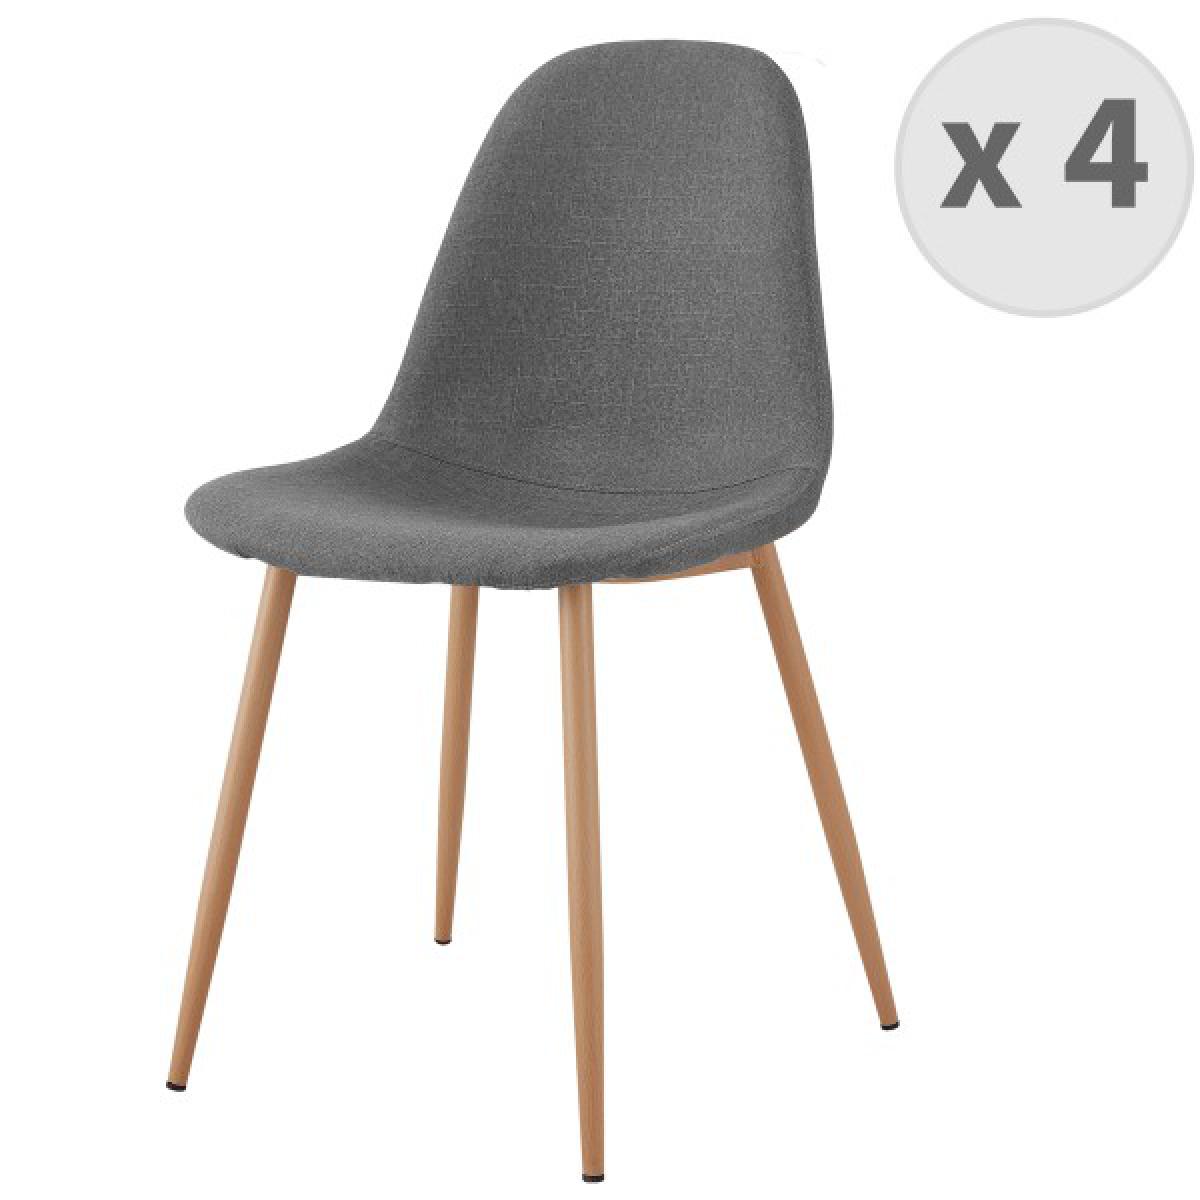 Moloo - Lot X4 chaises Orlando tissu gris clair pieds métal bois - Chaises